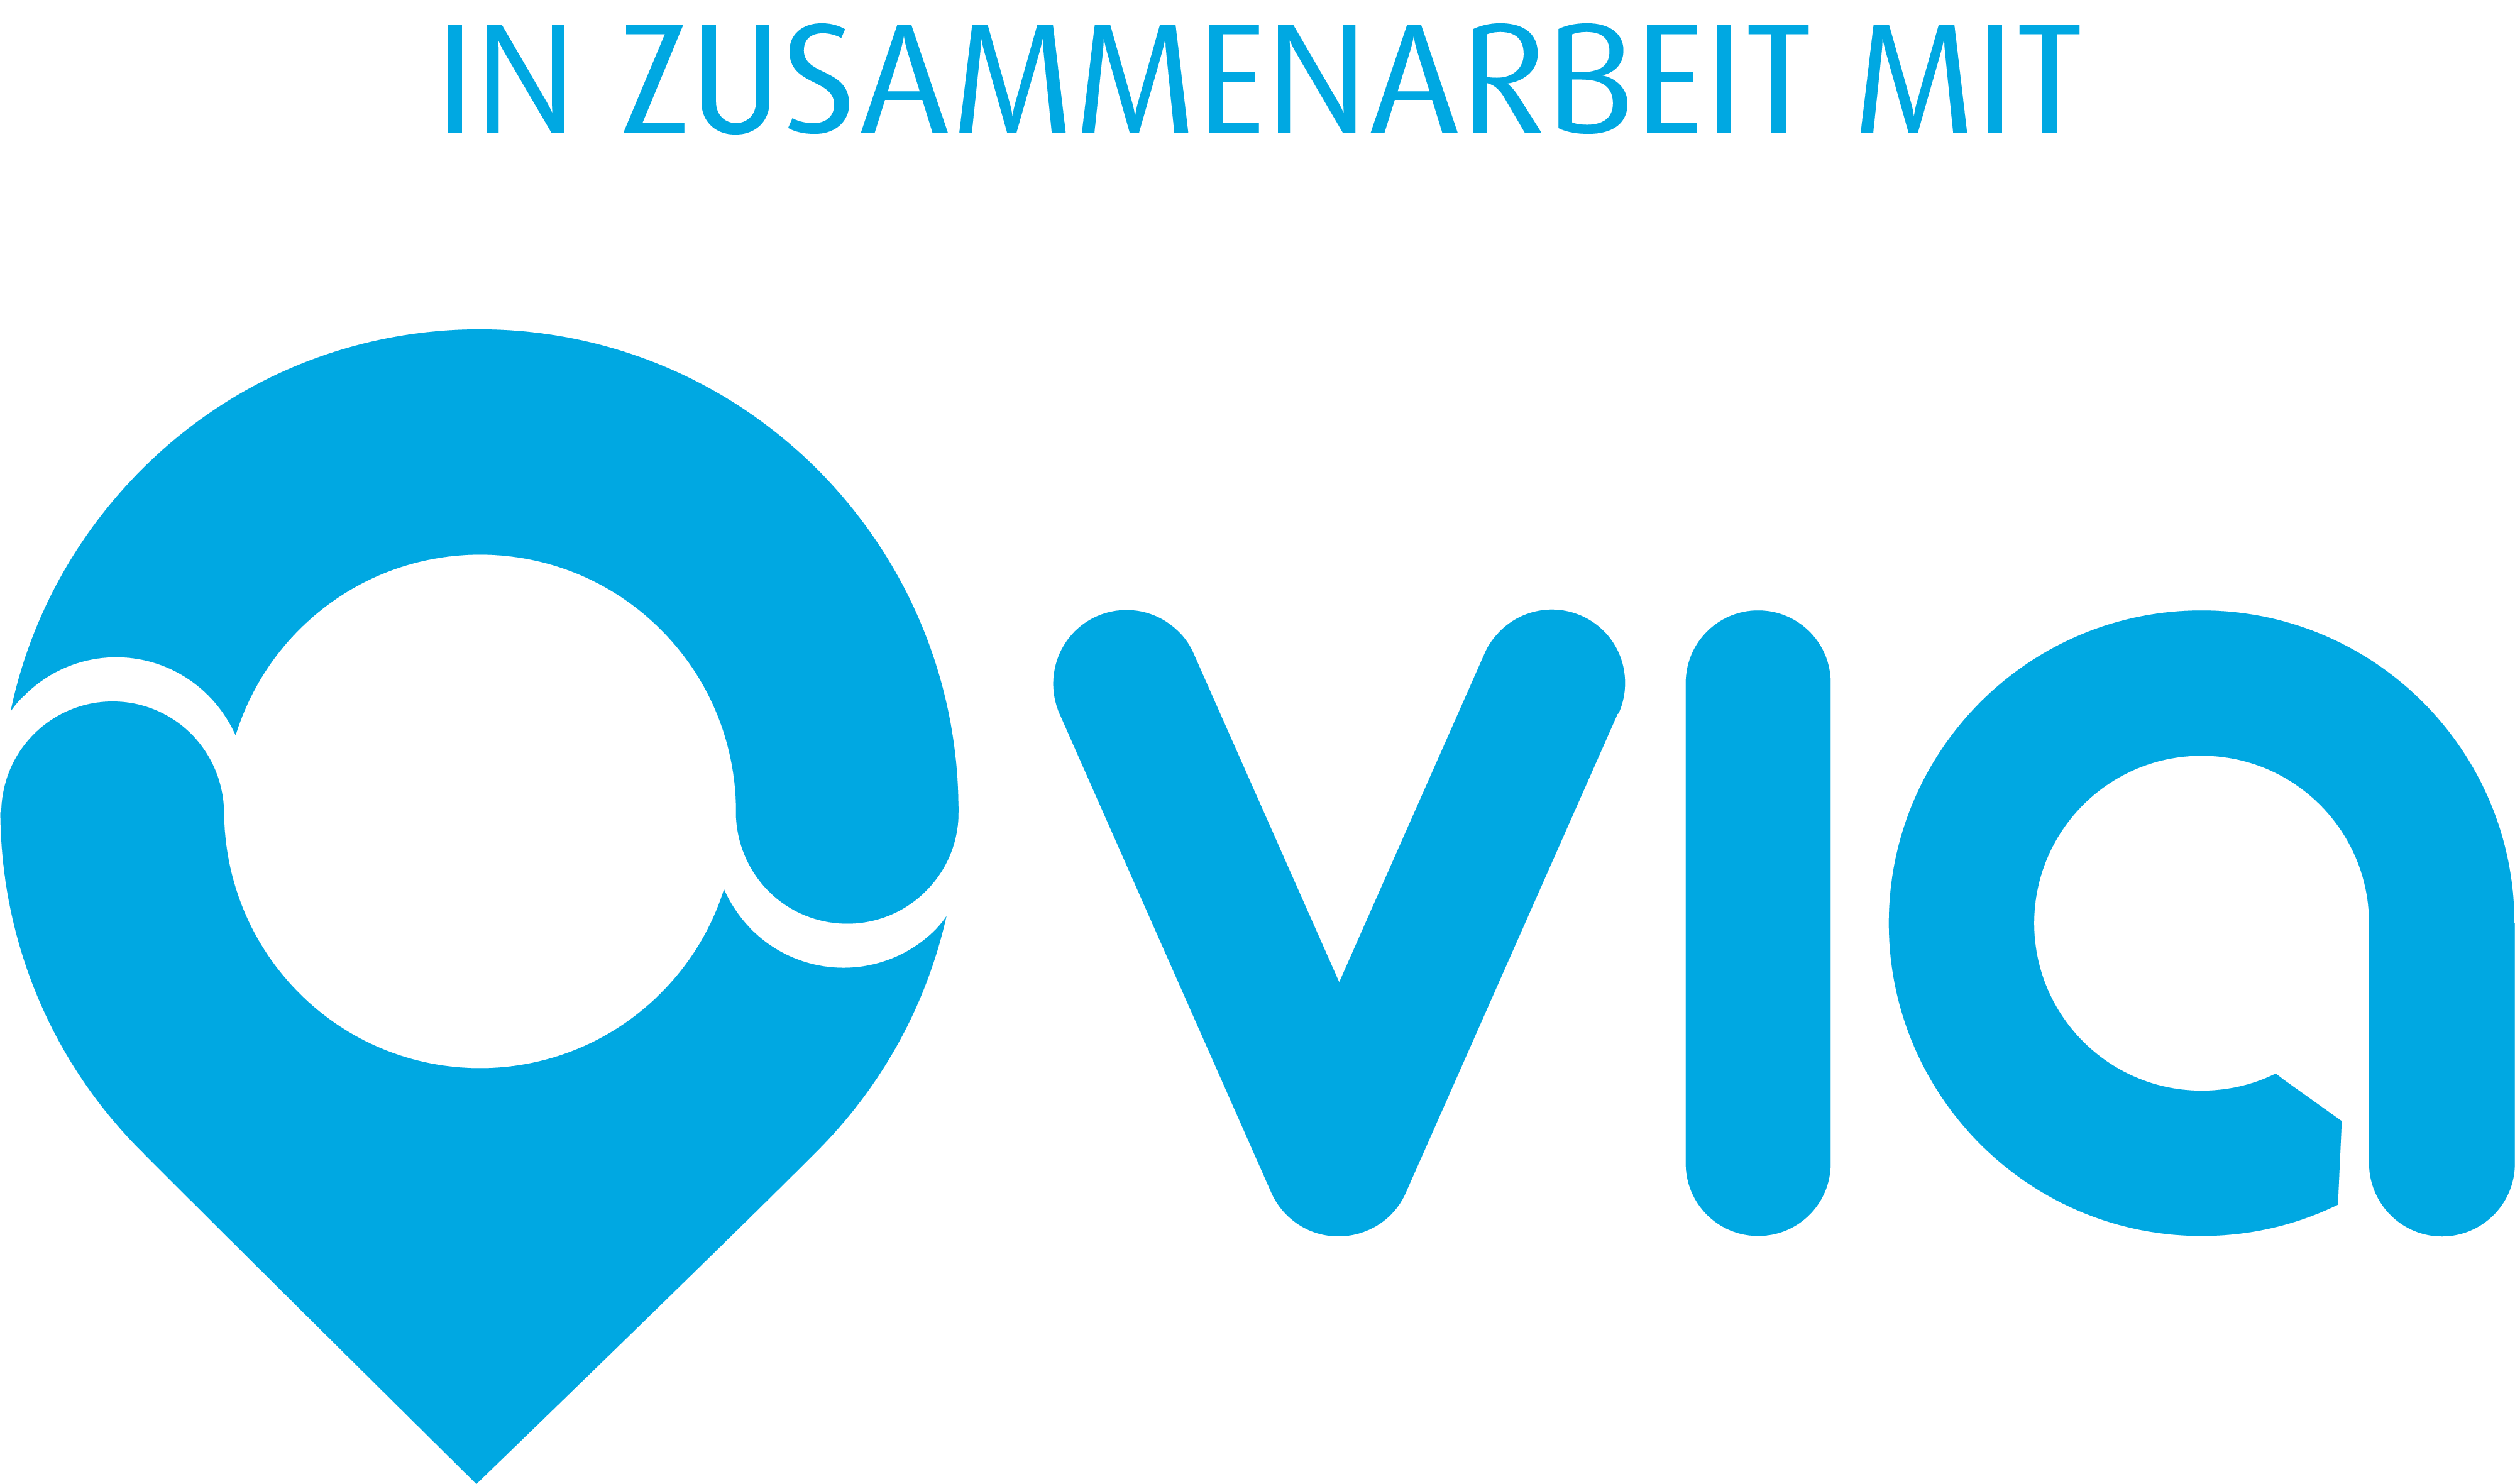 Via-logo-horizontal-lockup-RGB-blue_Zusammenarbeit